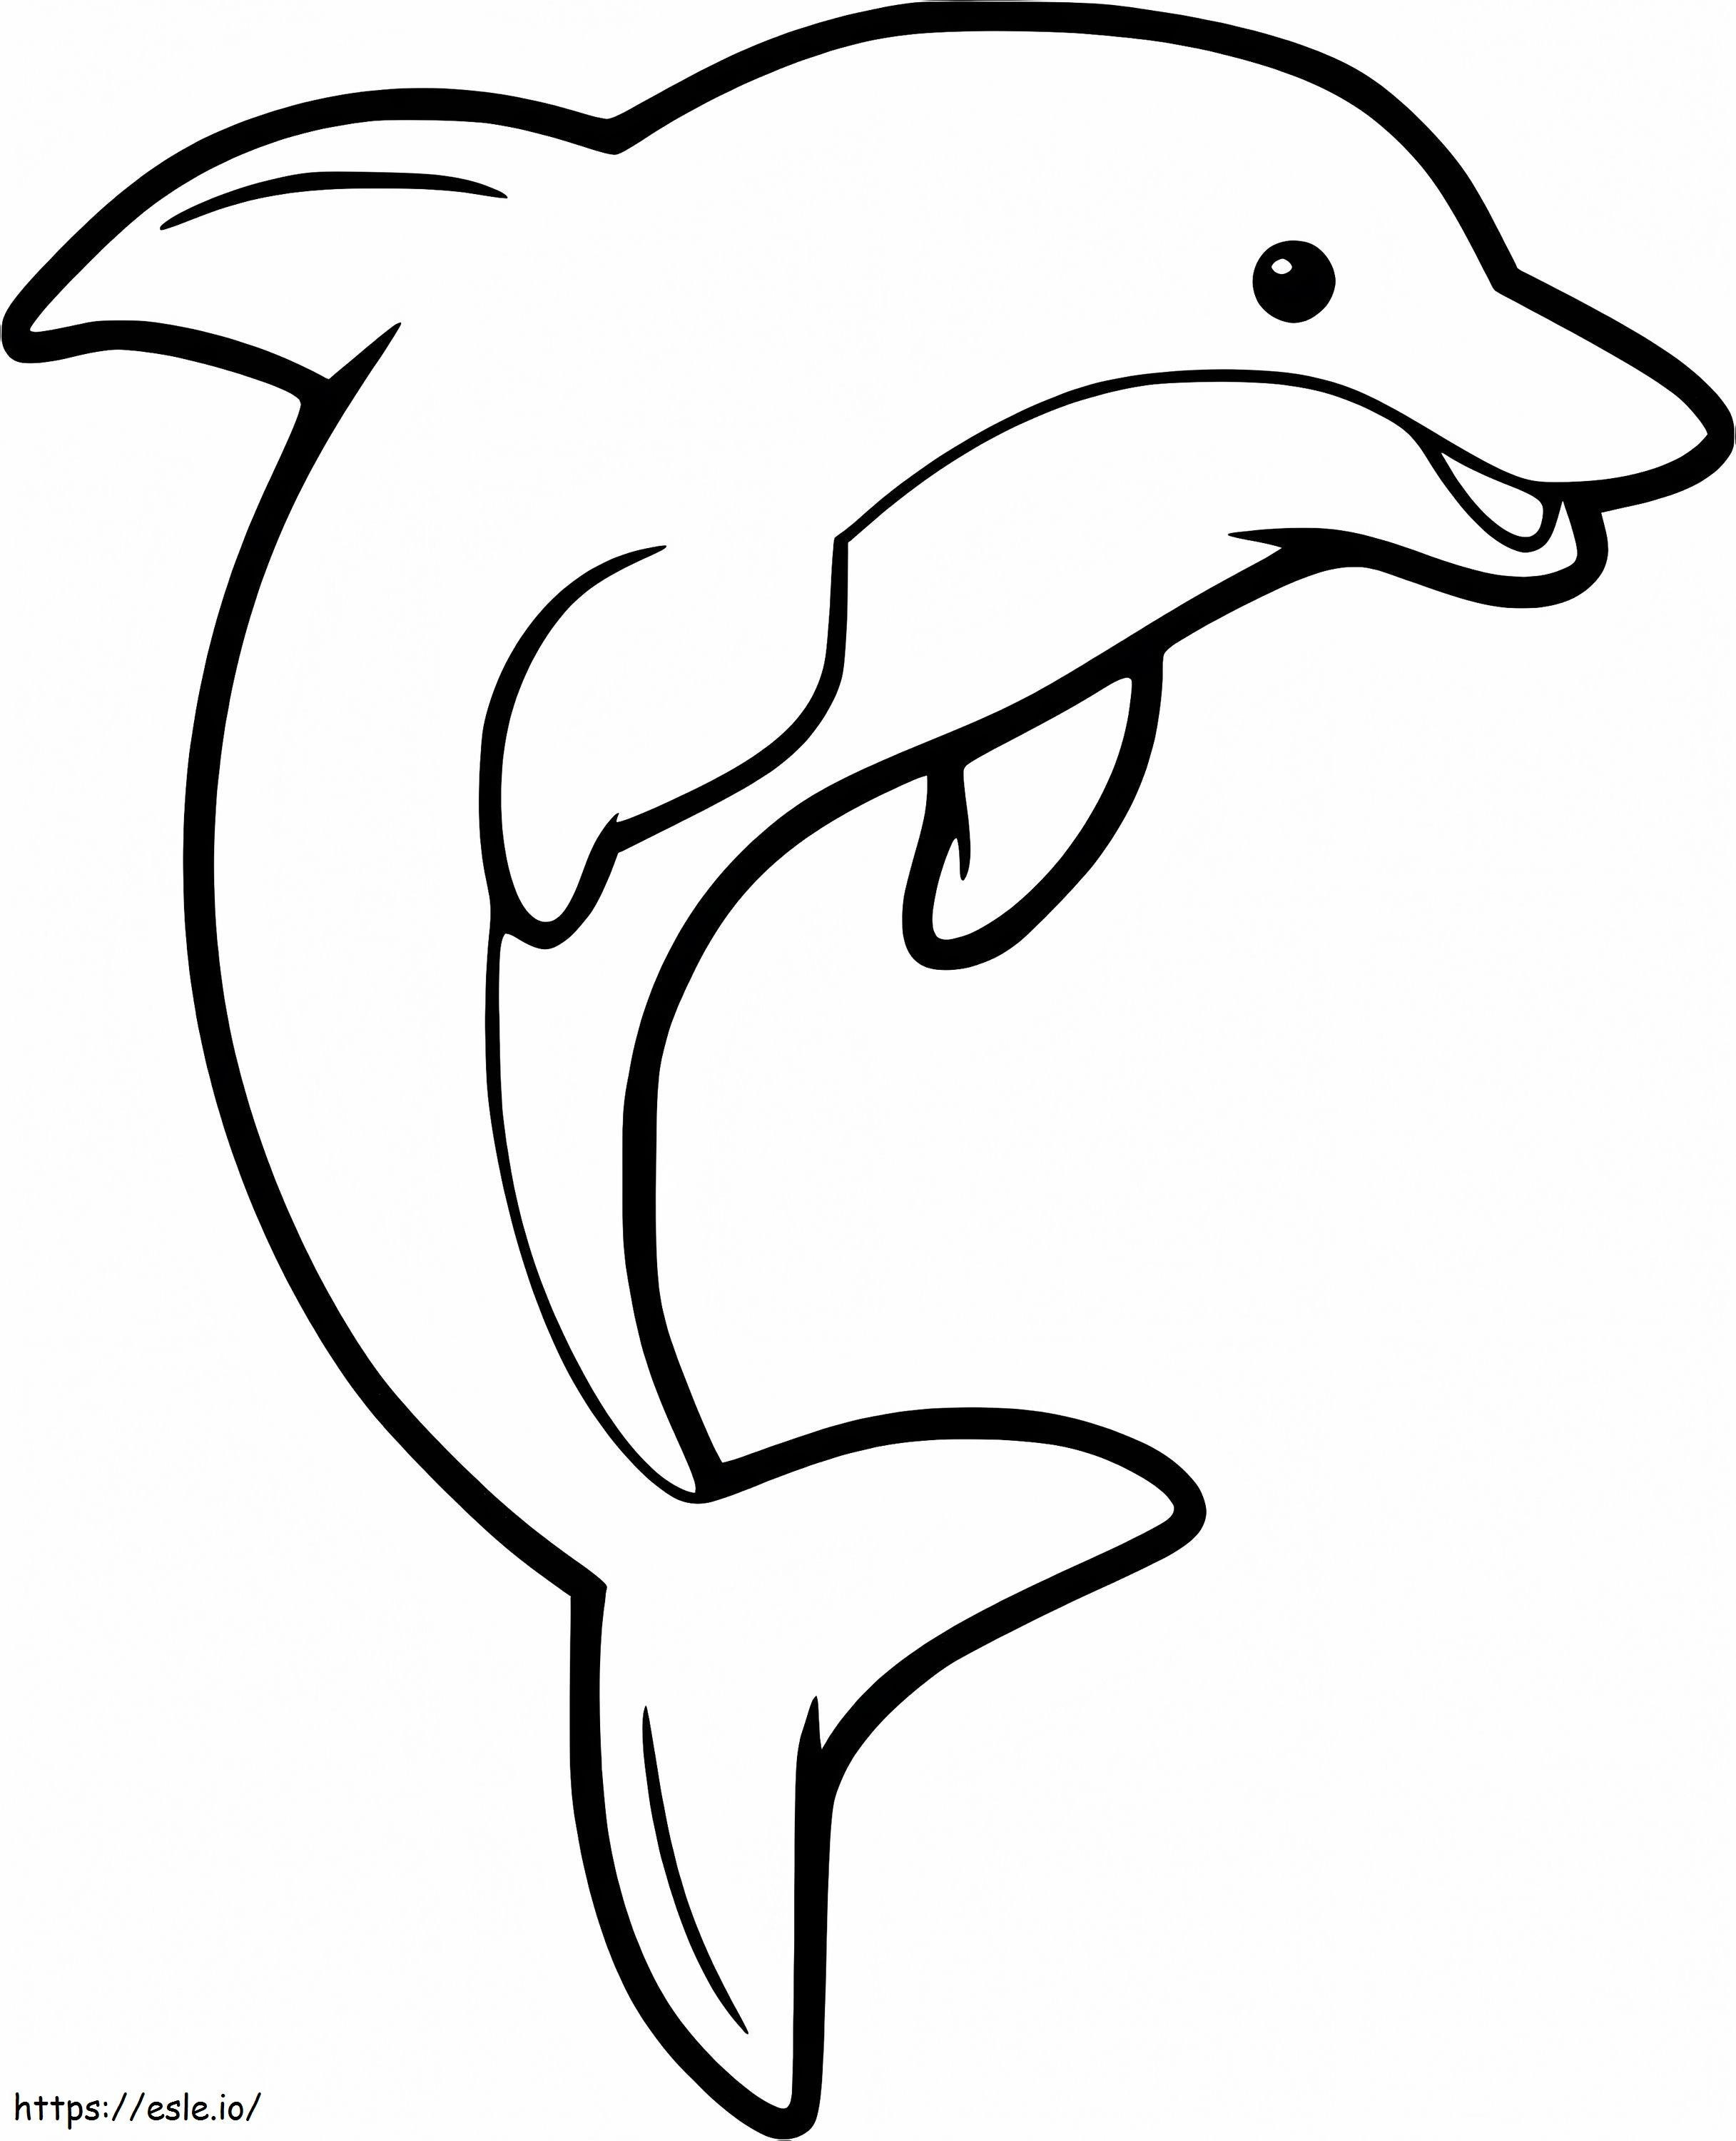 Kostenloser druckbarer Delphin ausmalbilder